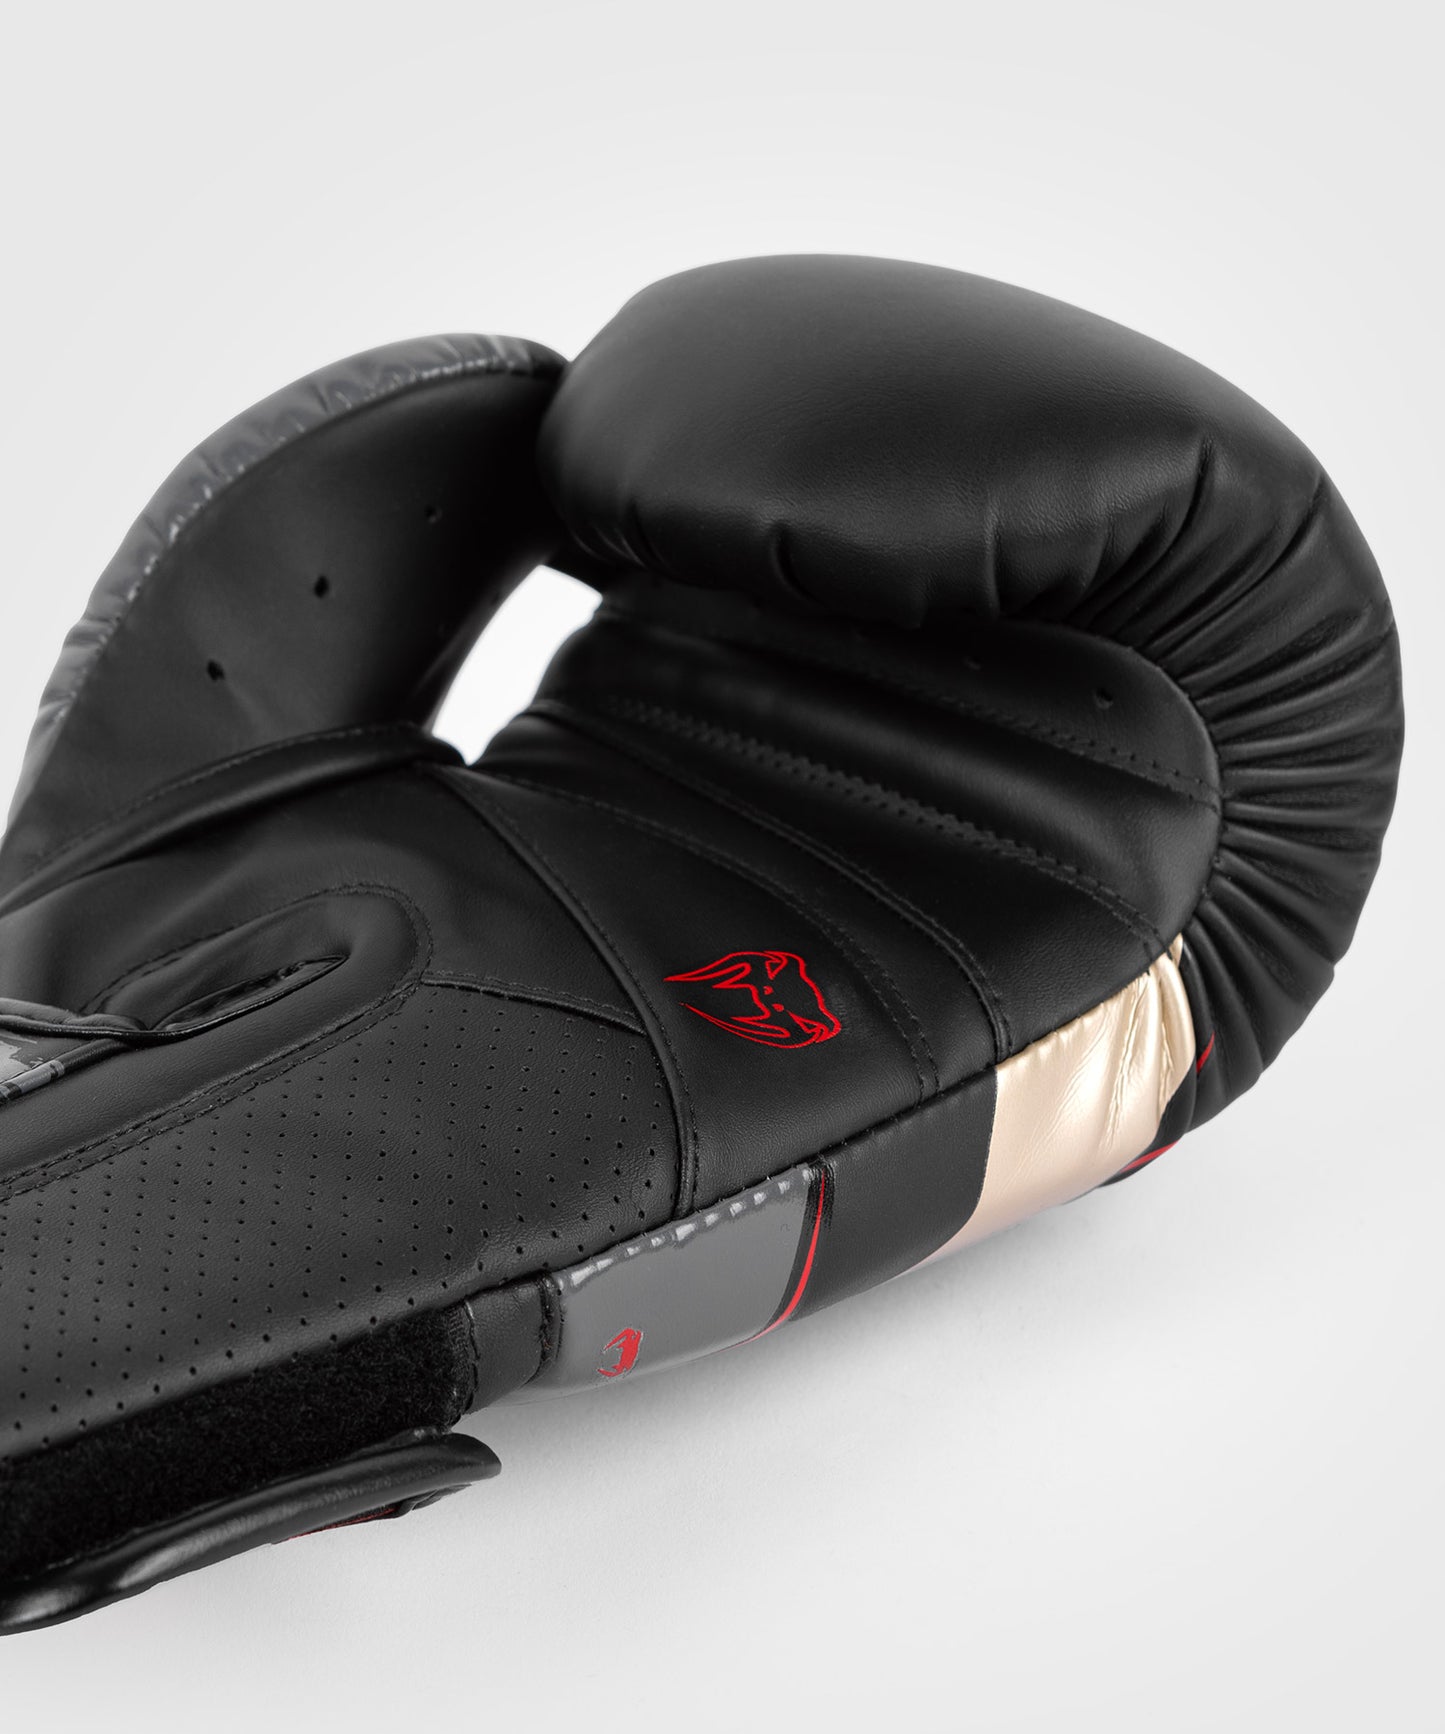 Venum Elite Evo Boxing Gloves - Black/Gold/Red